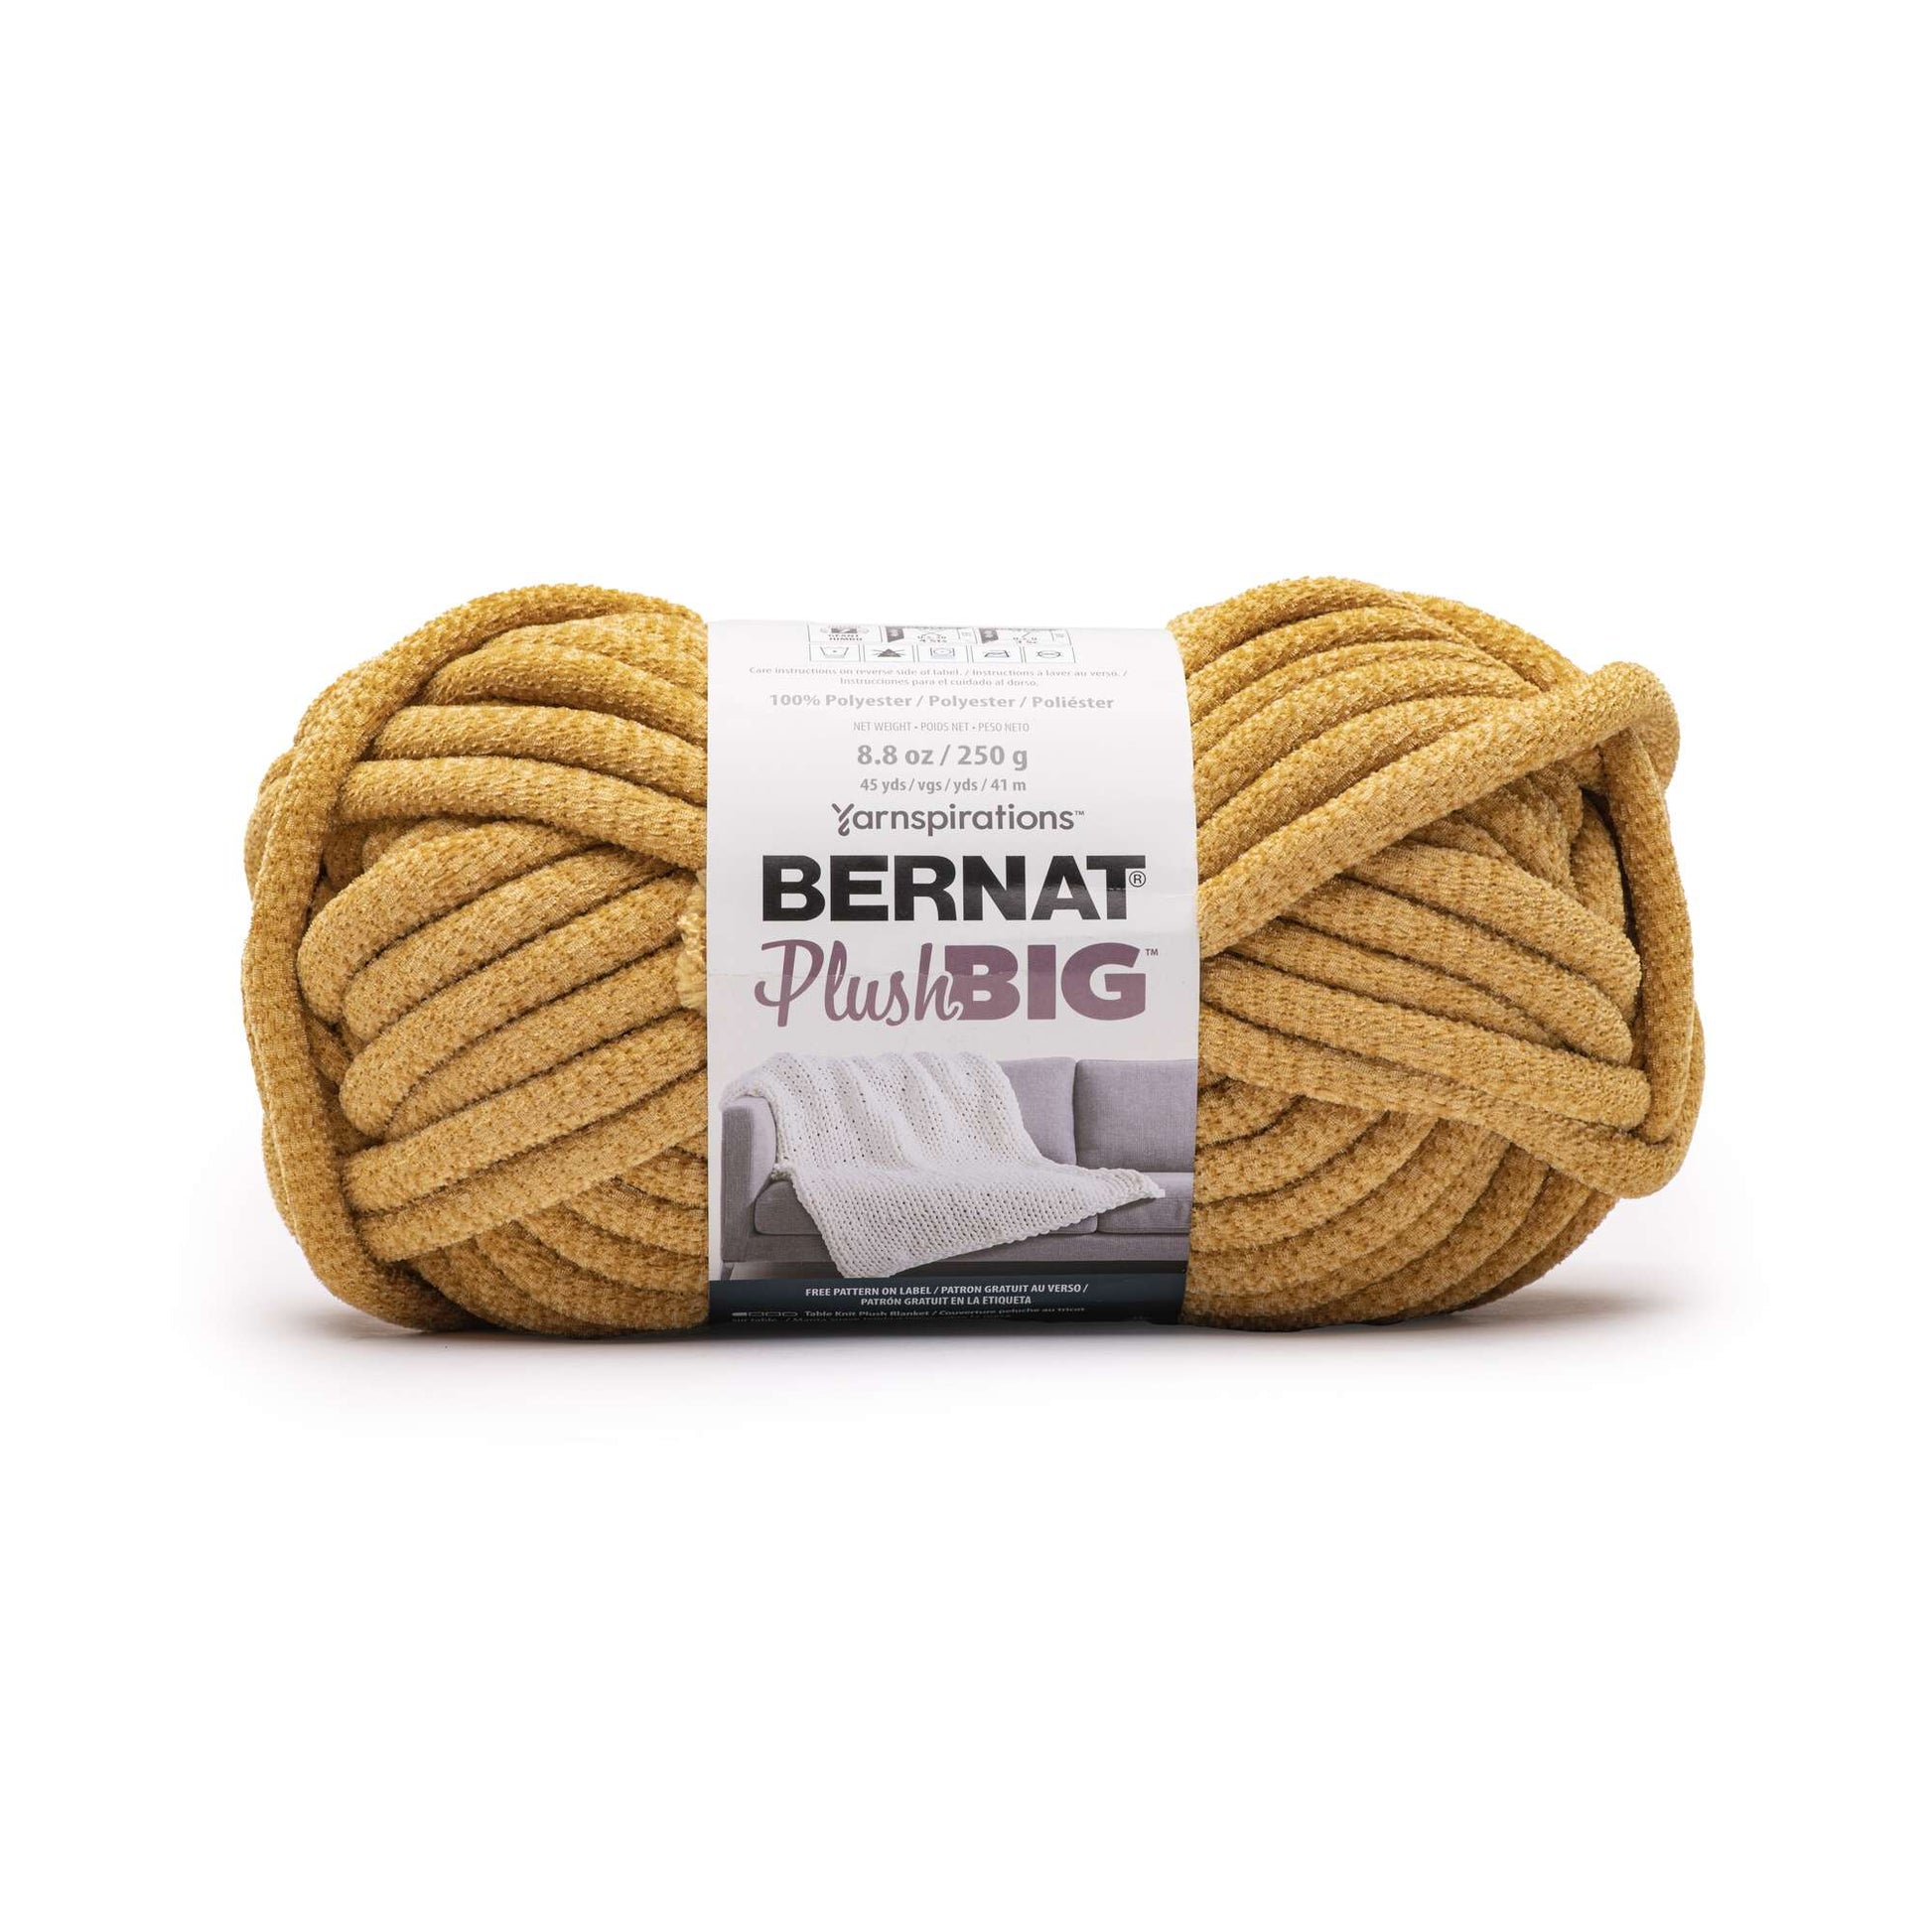 Bernat PlushBIG Yarn, Size: 8.8, Gold